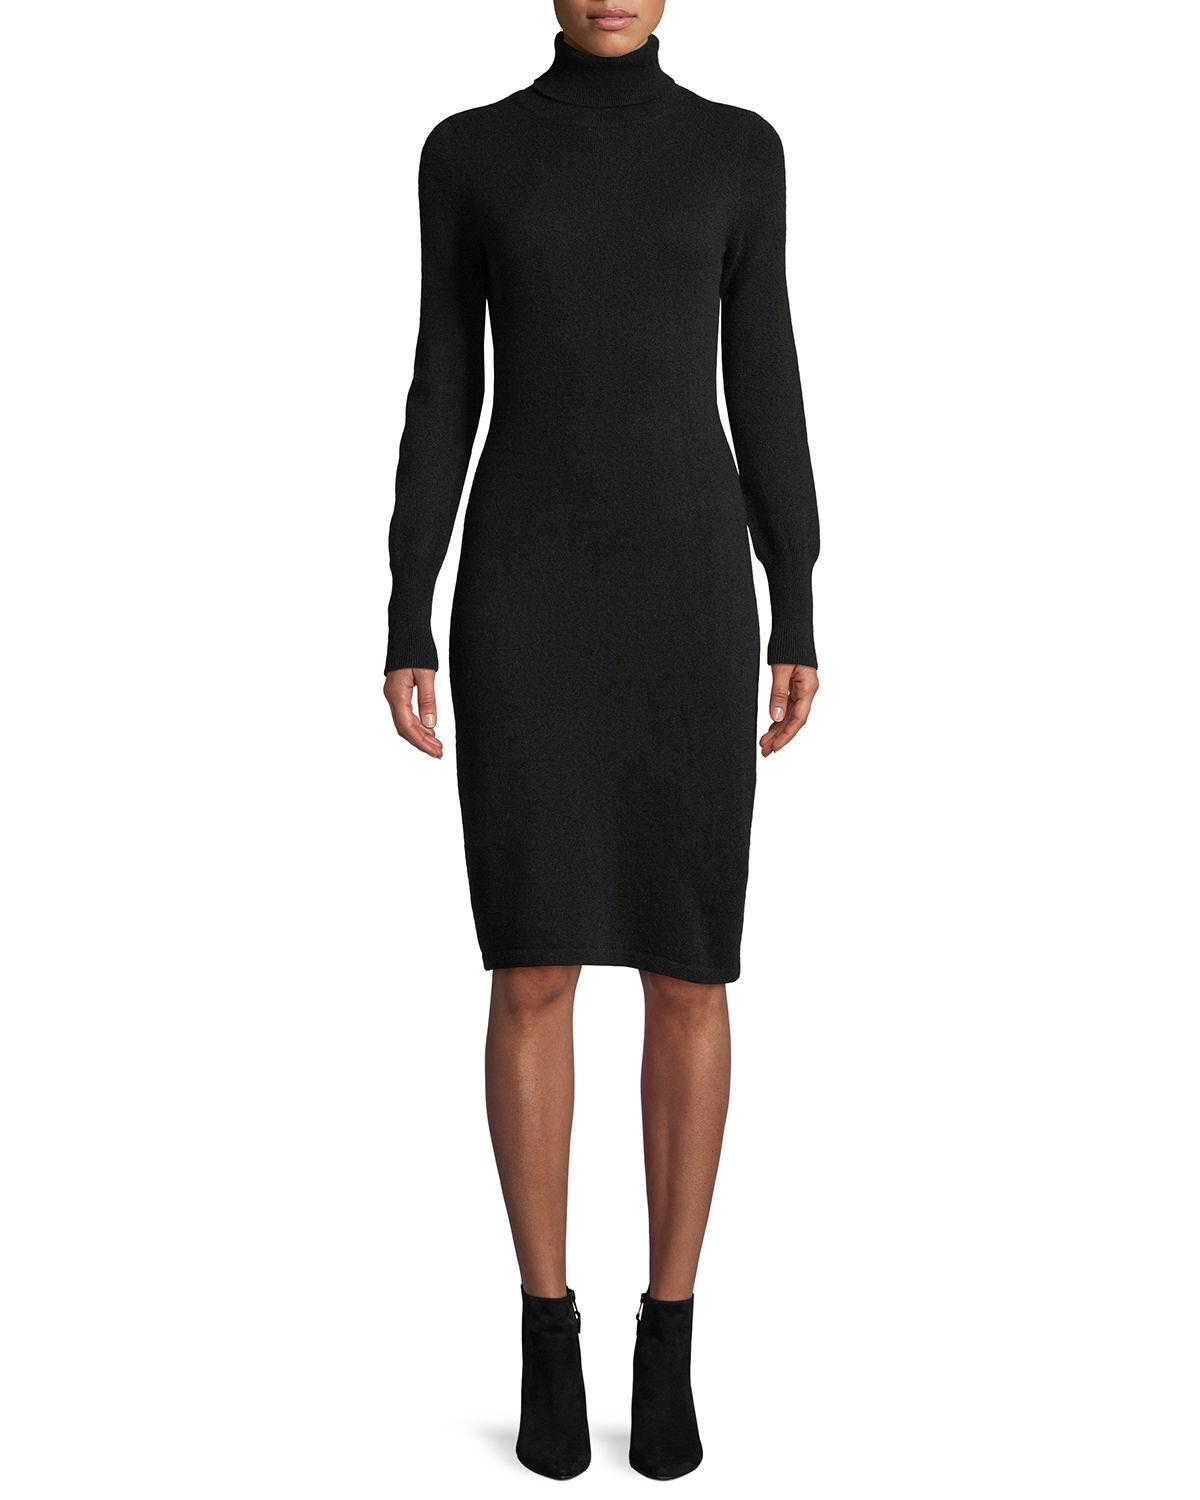 Lyst - Neiman Marcus Cashmere Turtleneck Sweater Dress in Black - Save ...